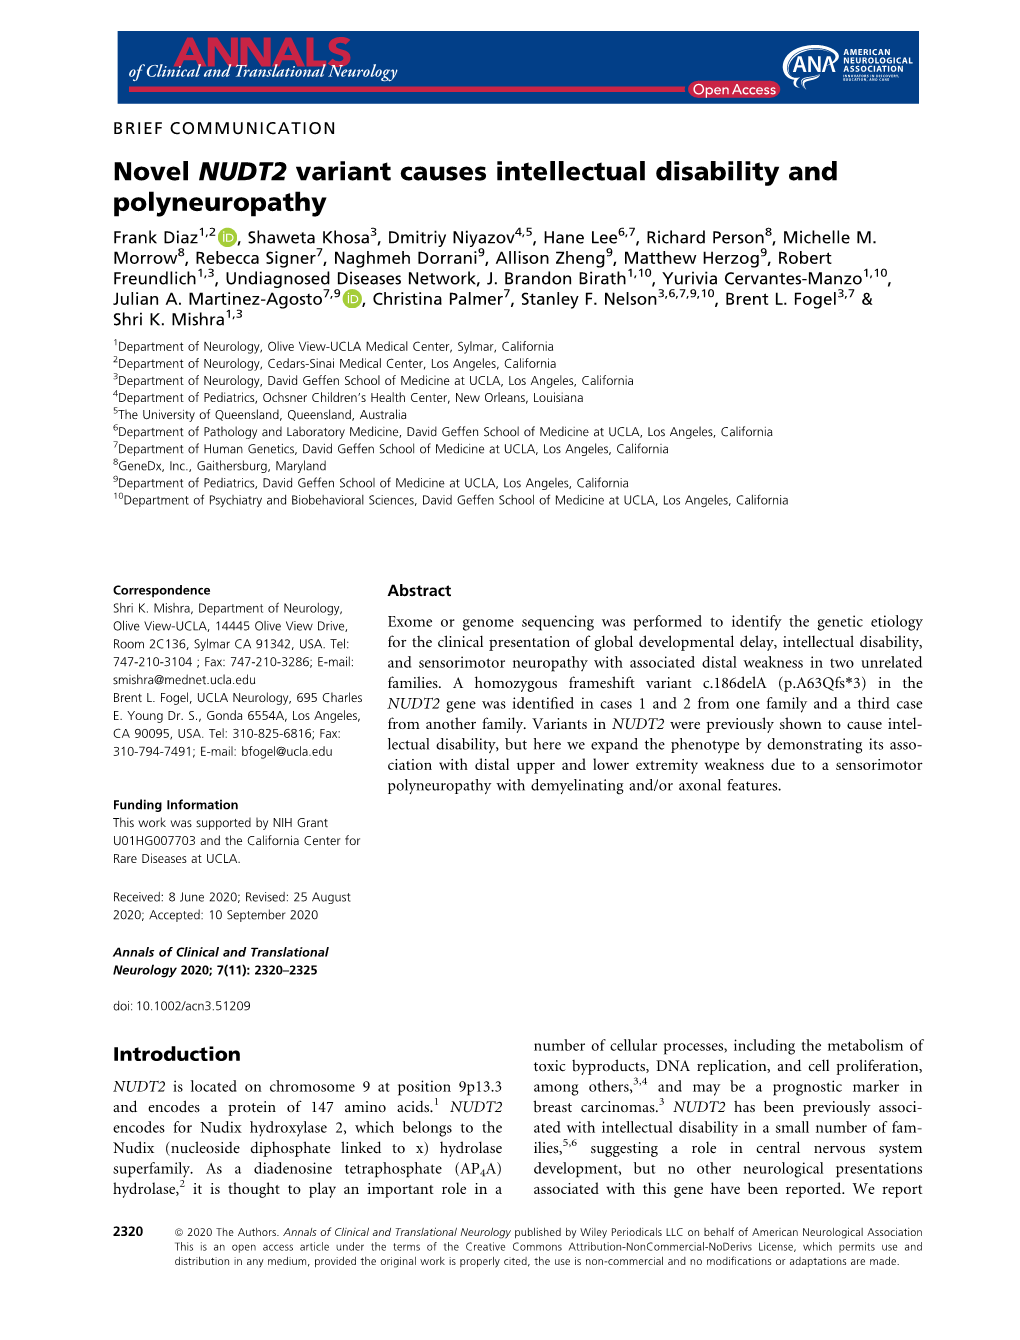 Novel NUDT2 Variant Causes Intellectual Disability and Polyneuropathy Frank Diaz1,2 , Shaweta Khosa3, Dmitriy Niyazov4,5, Hane Lee6,7, Richard Person8, Michelle M